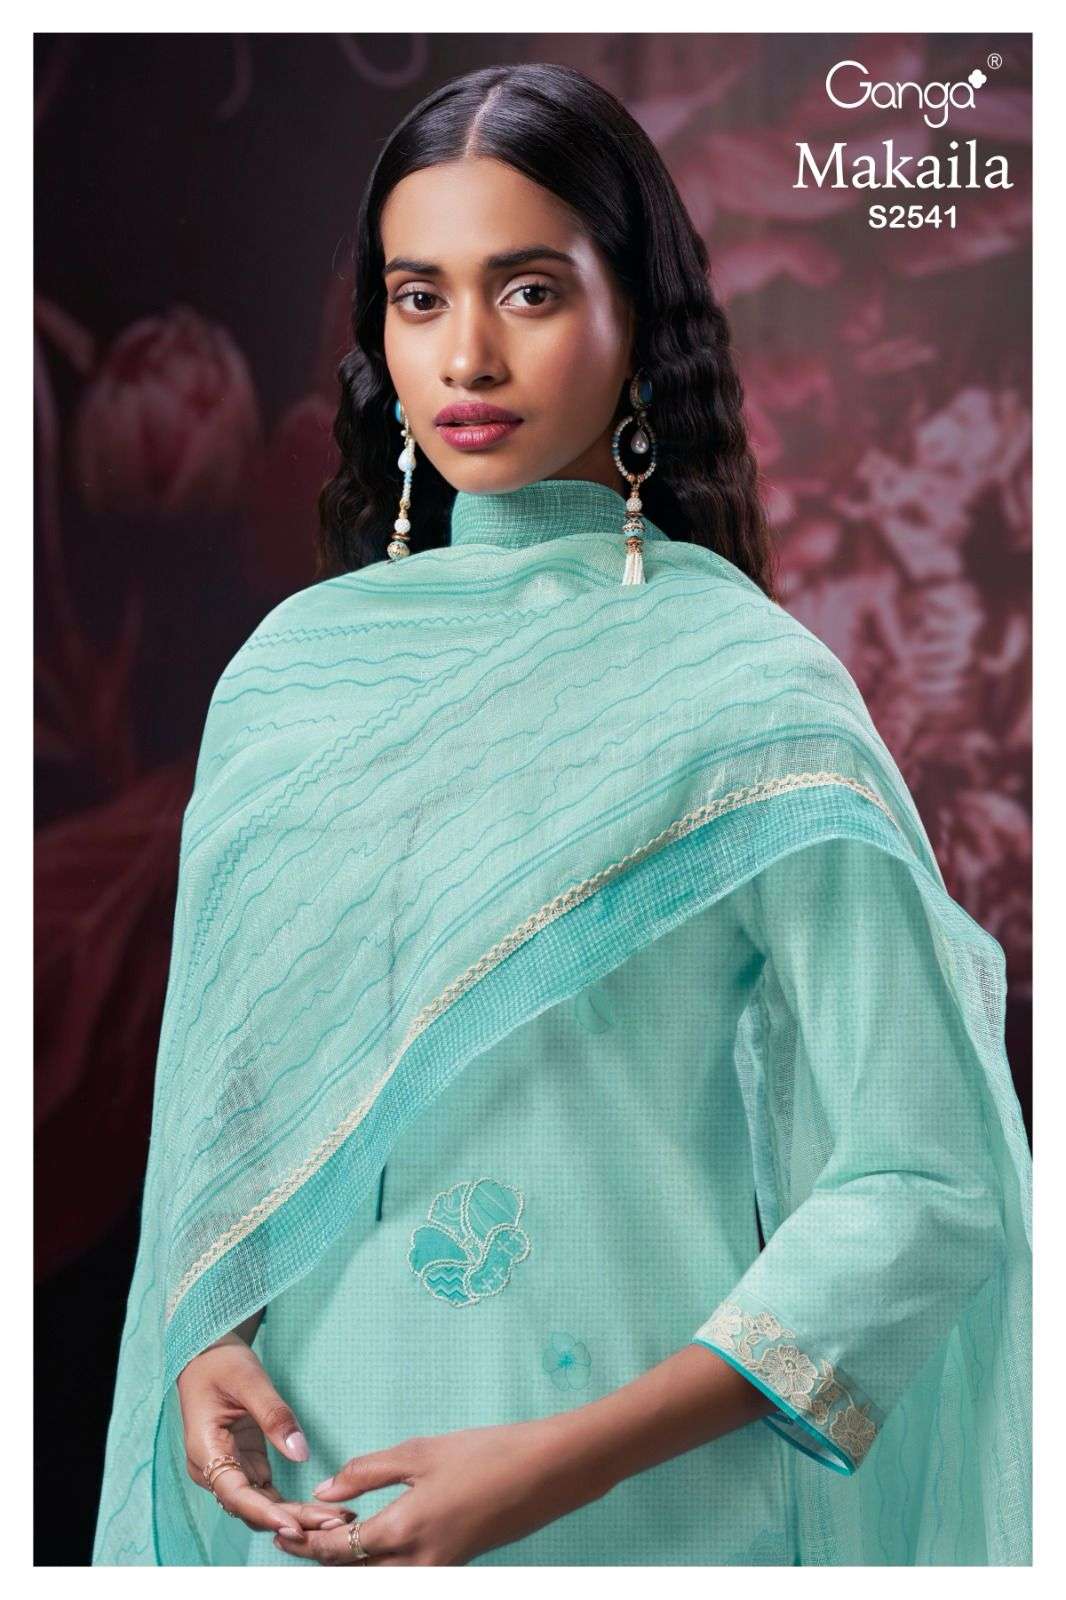 Ganga Makaila 2541 Premium Designs Cotton Ganga Fashion Suit Suppliers